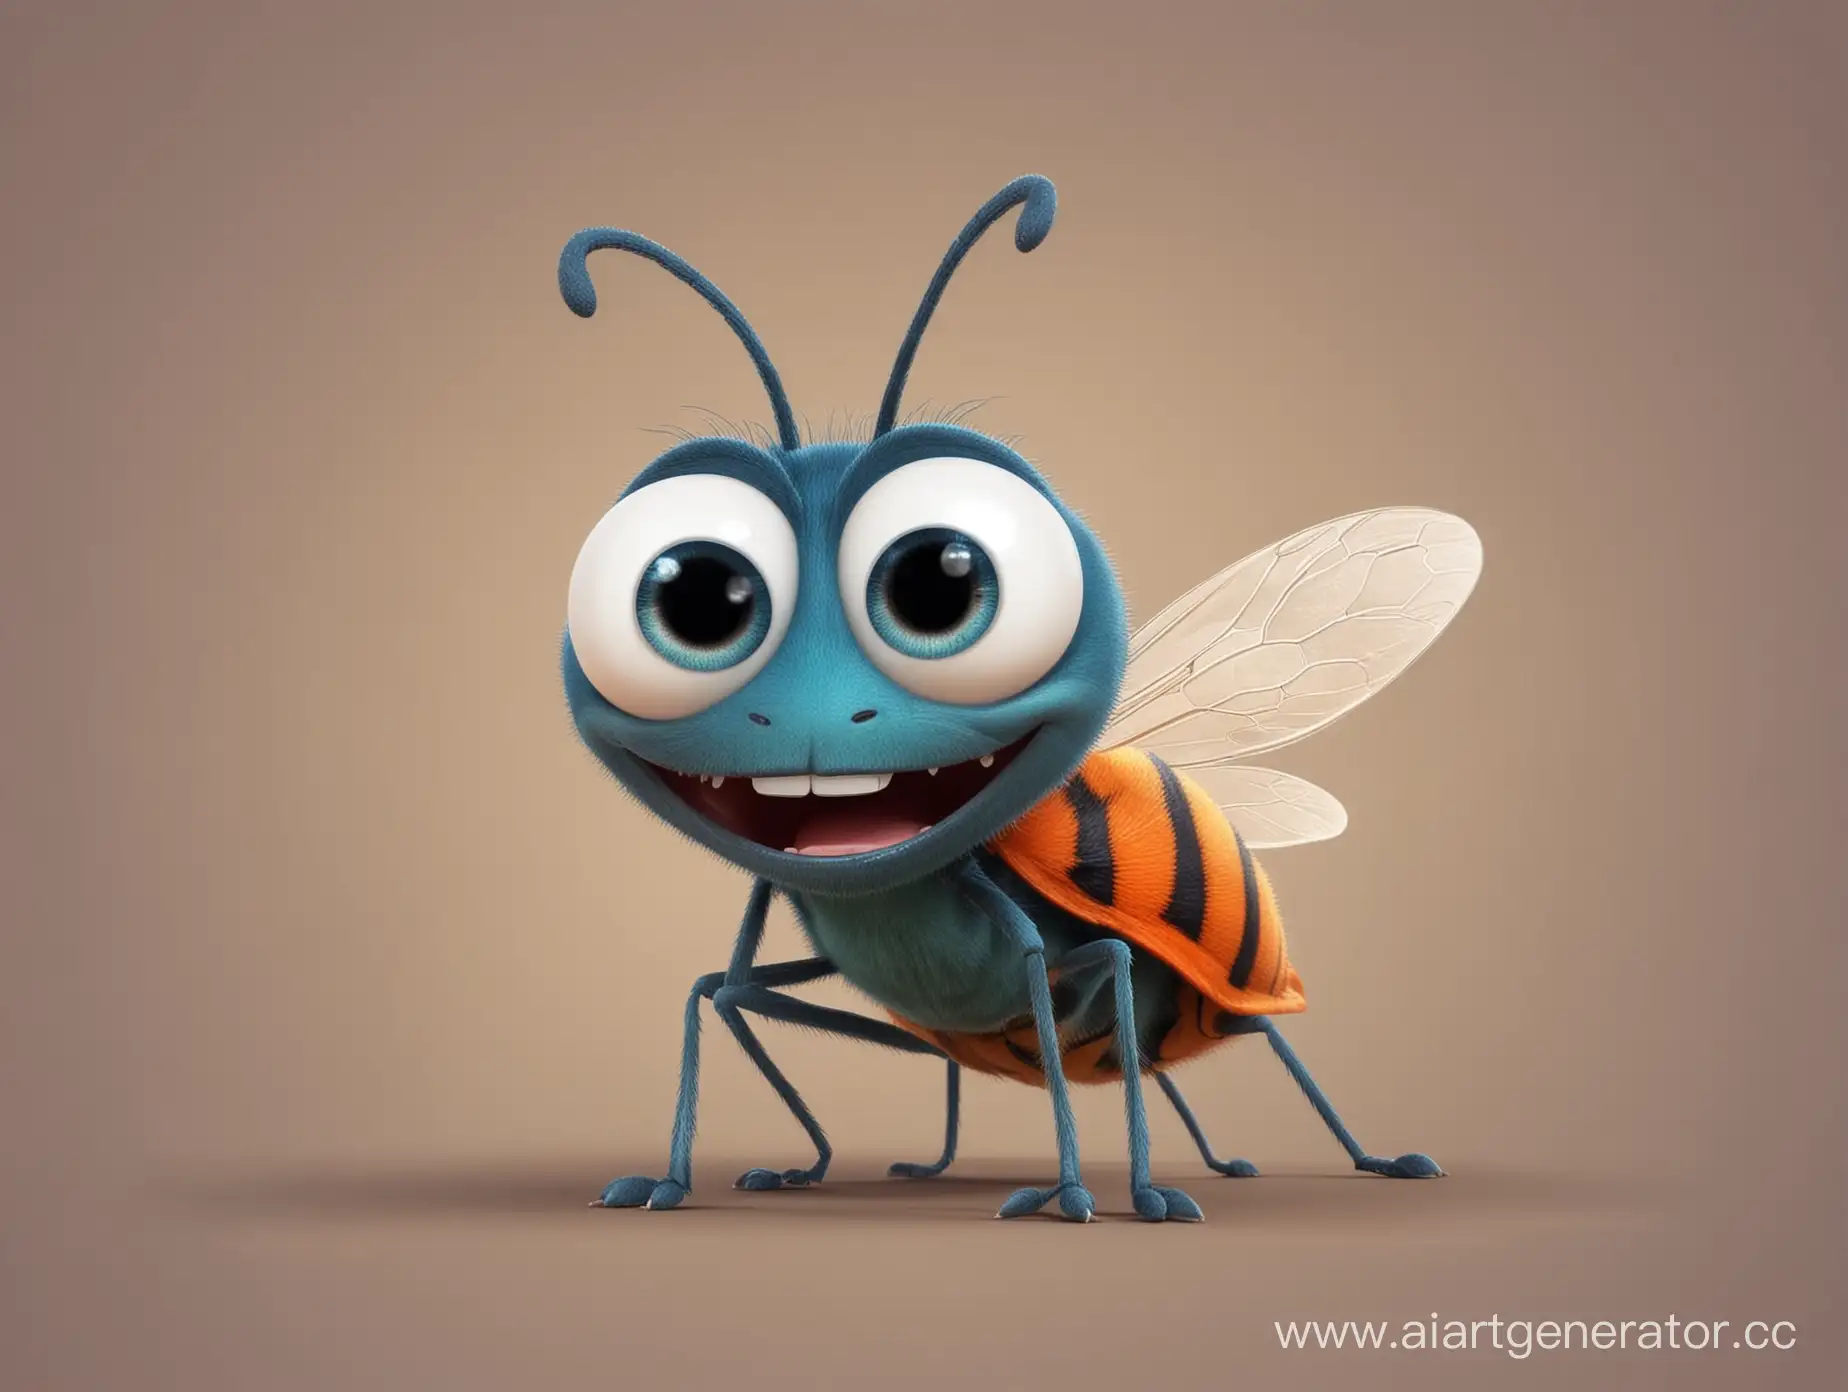 Joyful-Animated-Bugs-in-a-Lively-Garden